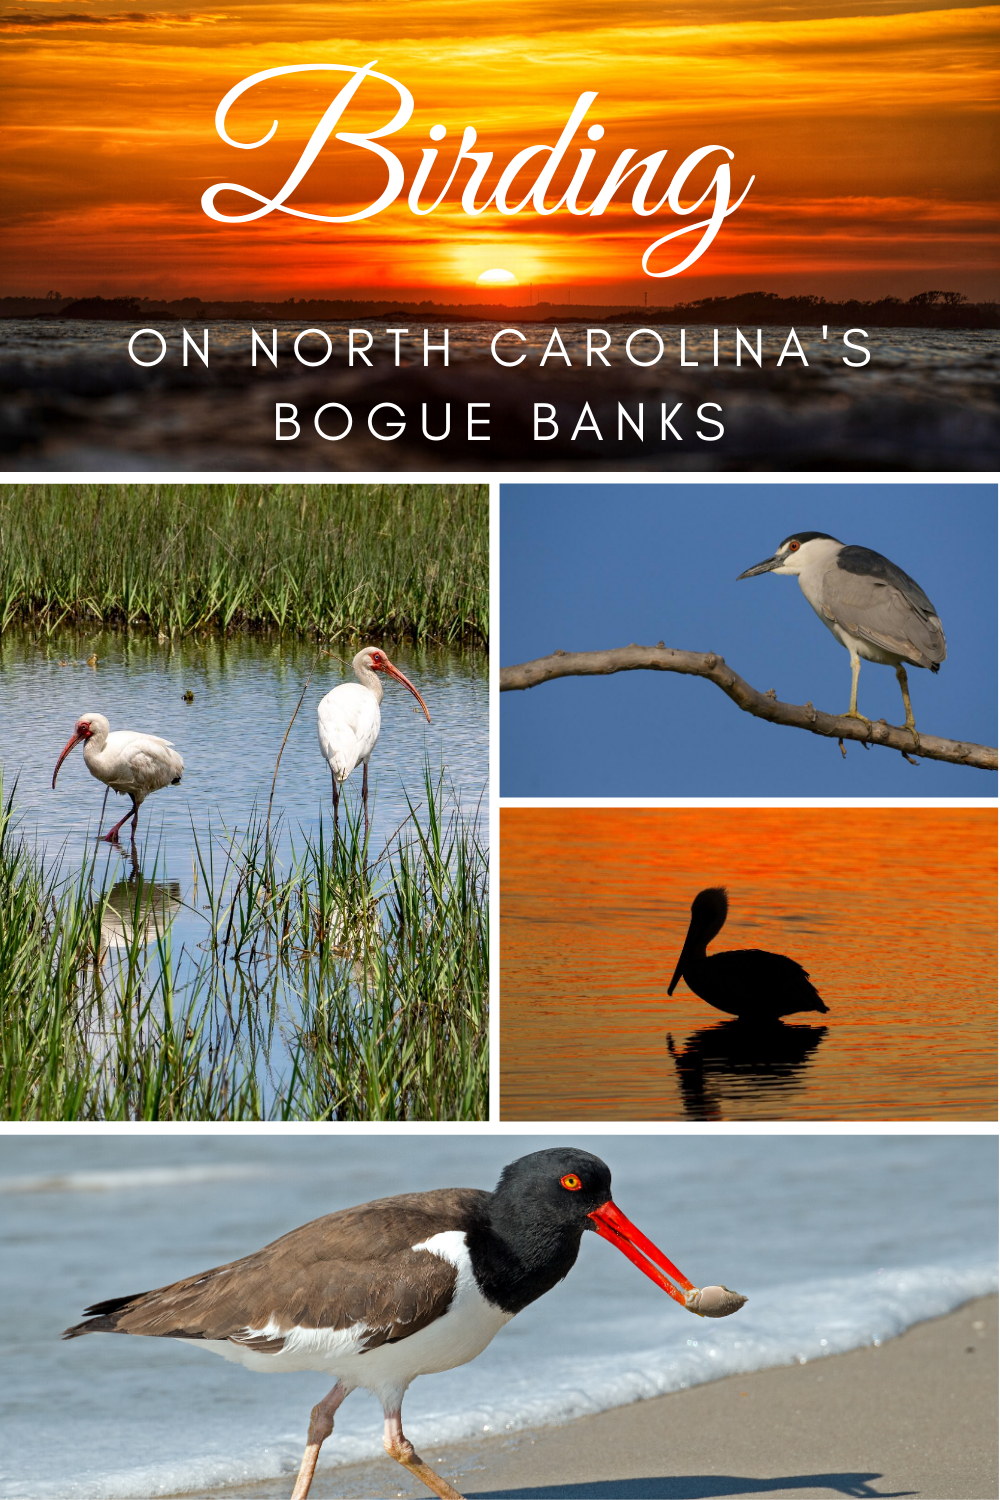 Birdwatching on North Carolina’s Bogue Banks